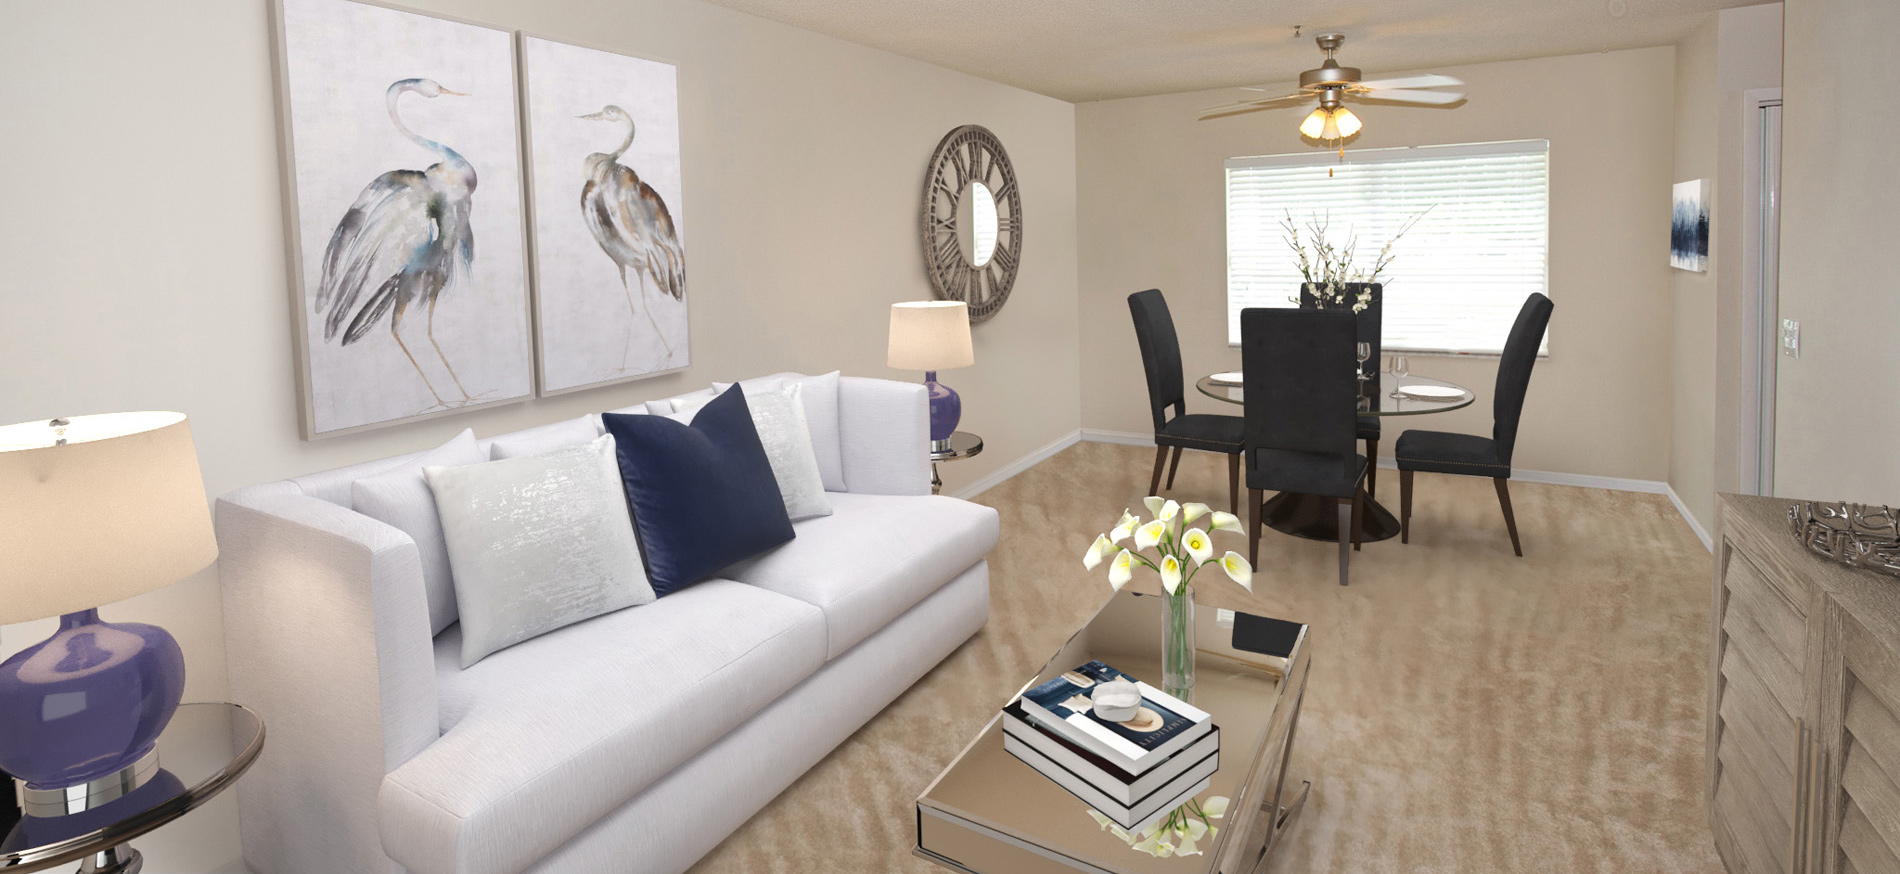 Alafaya Woods Living Room Virtually Staged by RoOomy